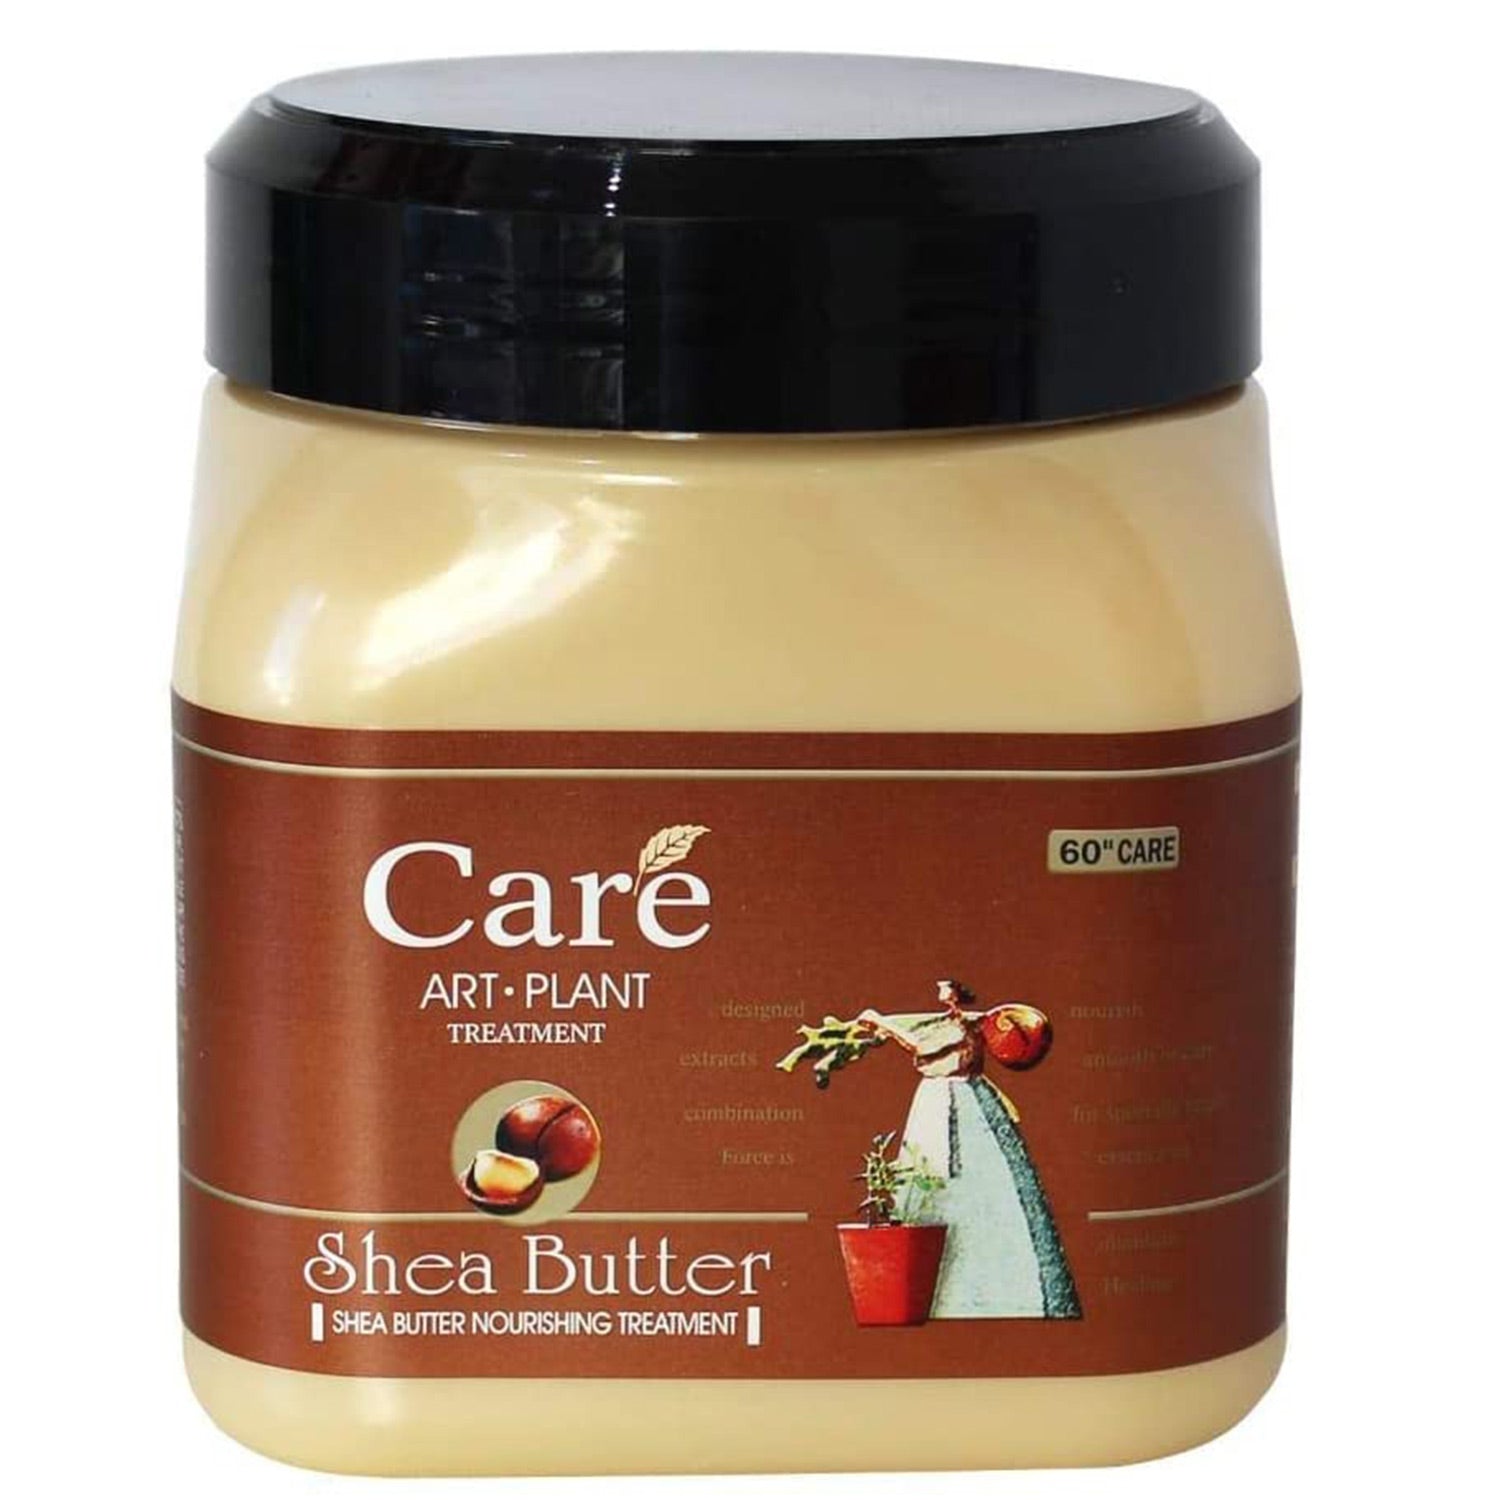 Washami Care art plant shea butter nourishing treatment 650 g Value Pack of 2 